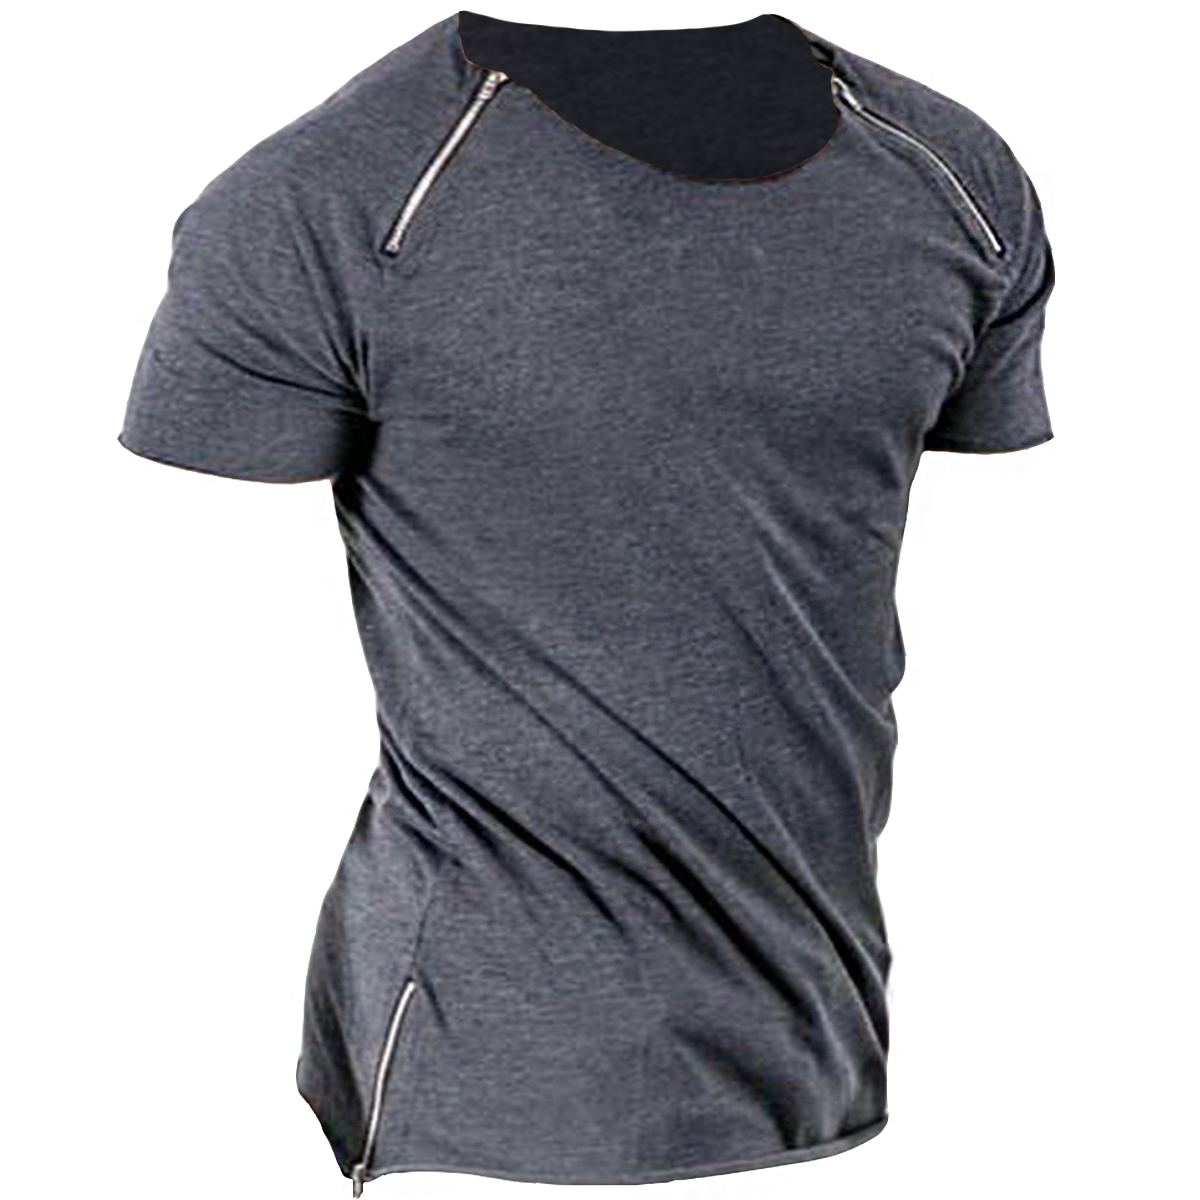 Men's Retro Casual Round Neck Chic Short Sleeve T-shirt